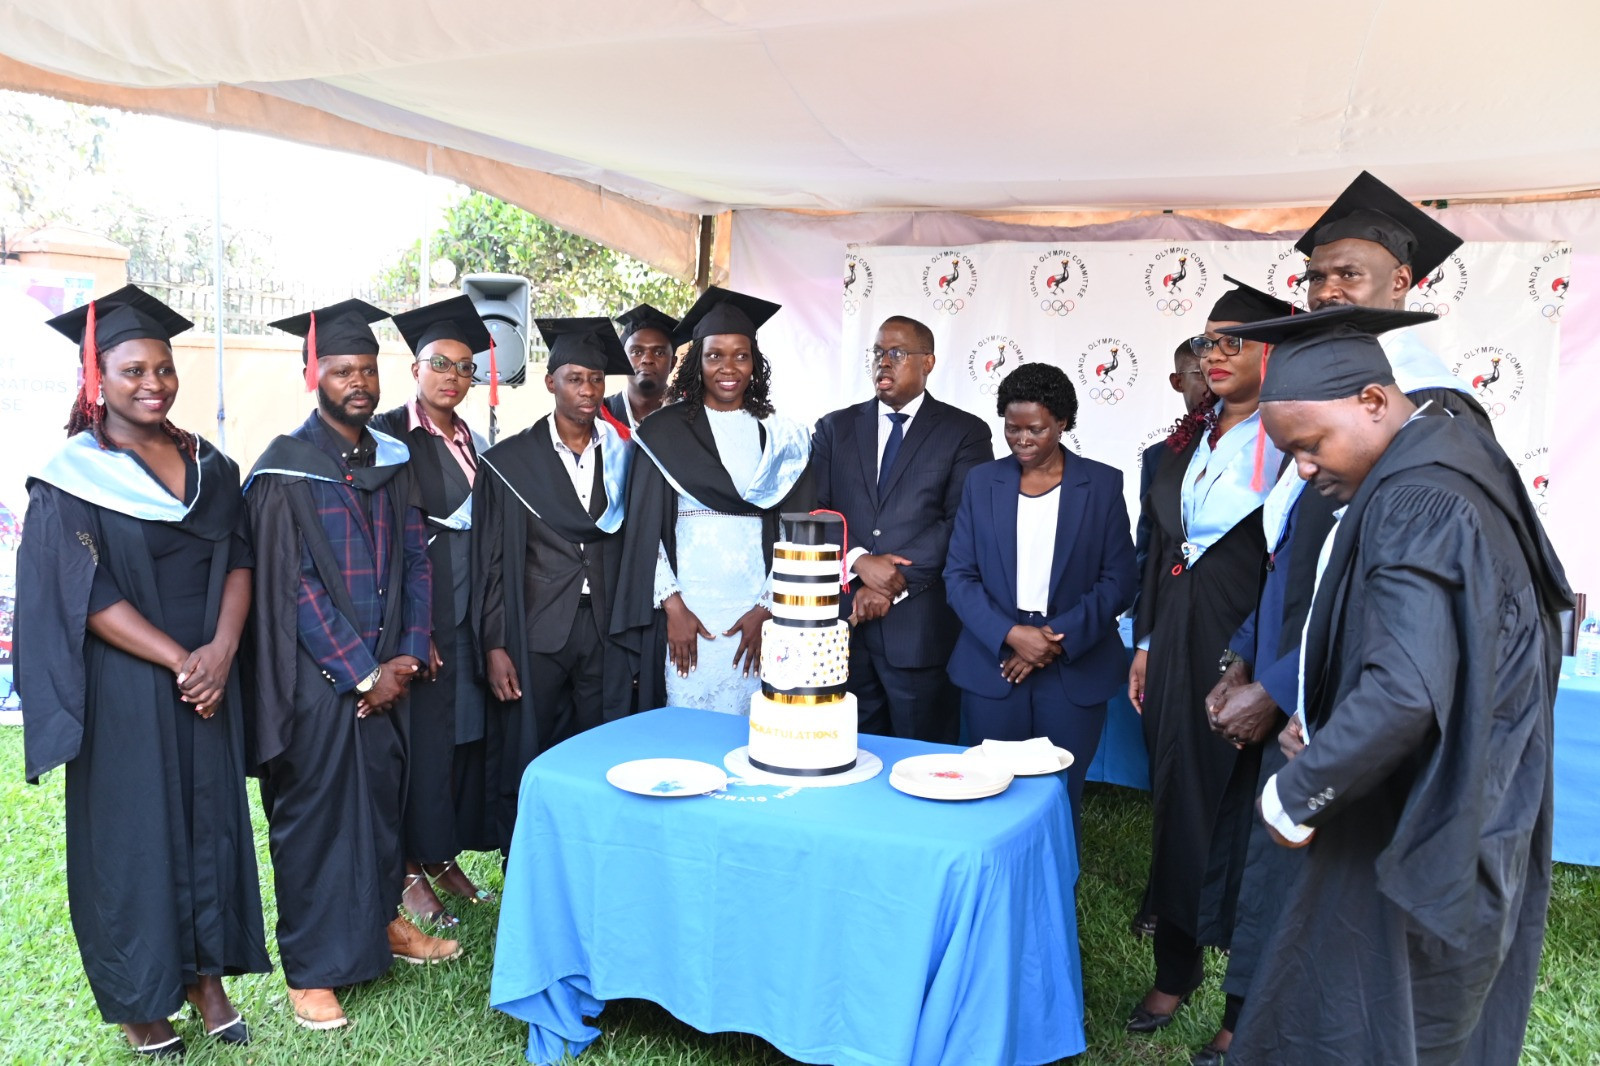 Uganda Olympic Committee celebrates its 8th graduation ceremony